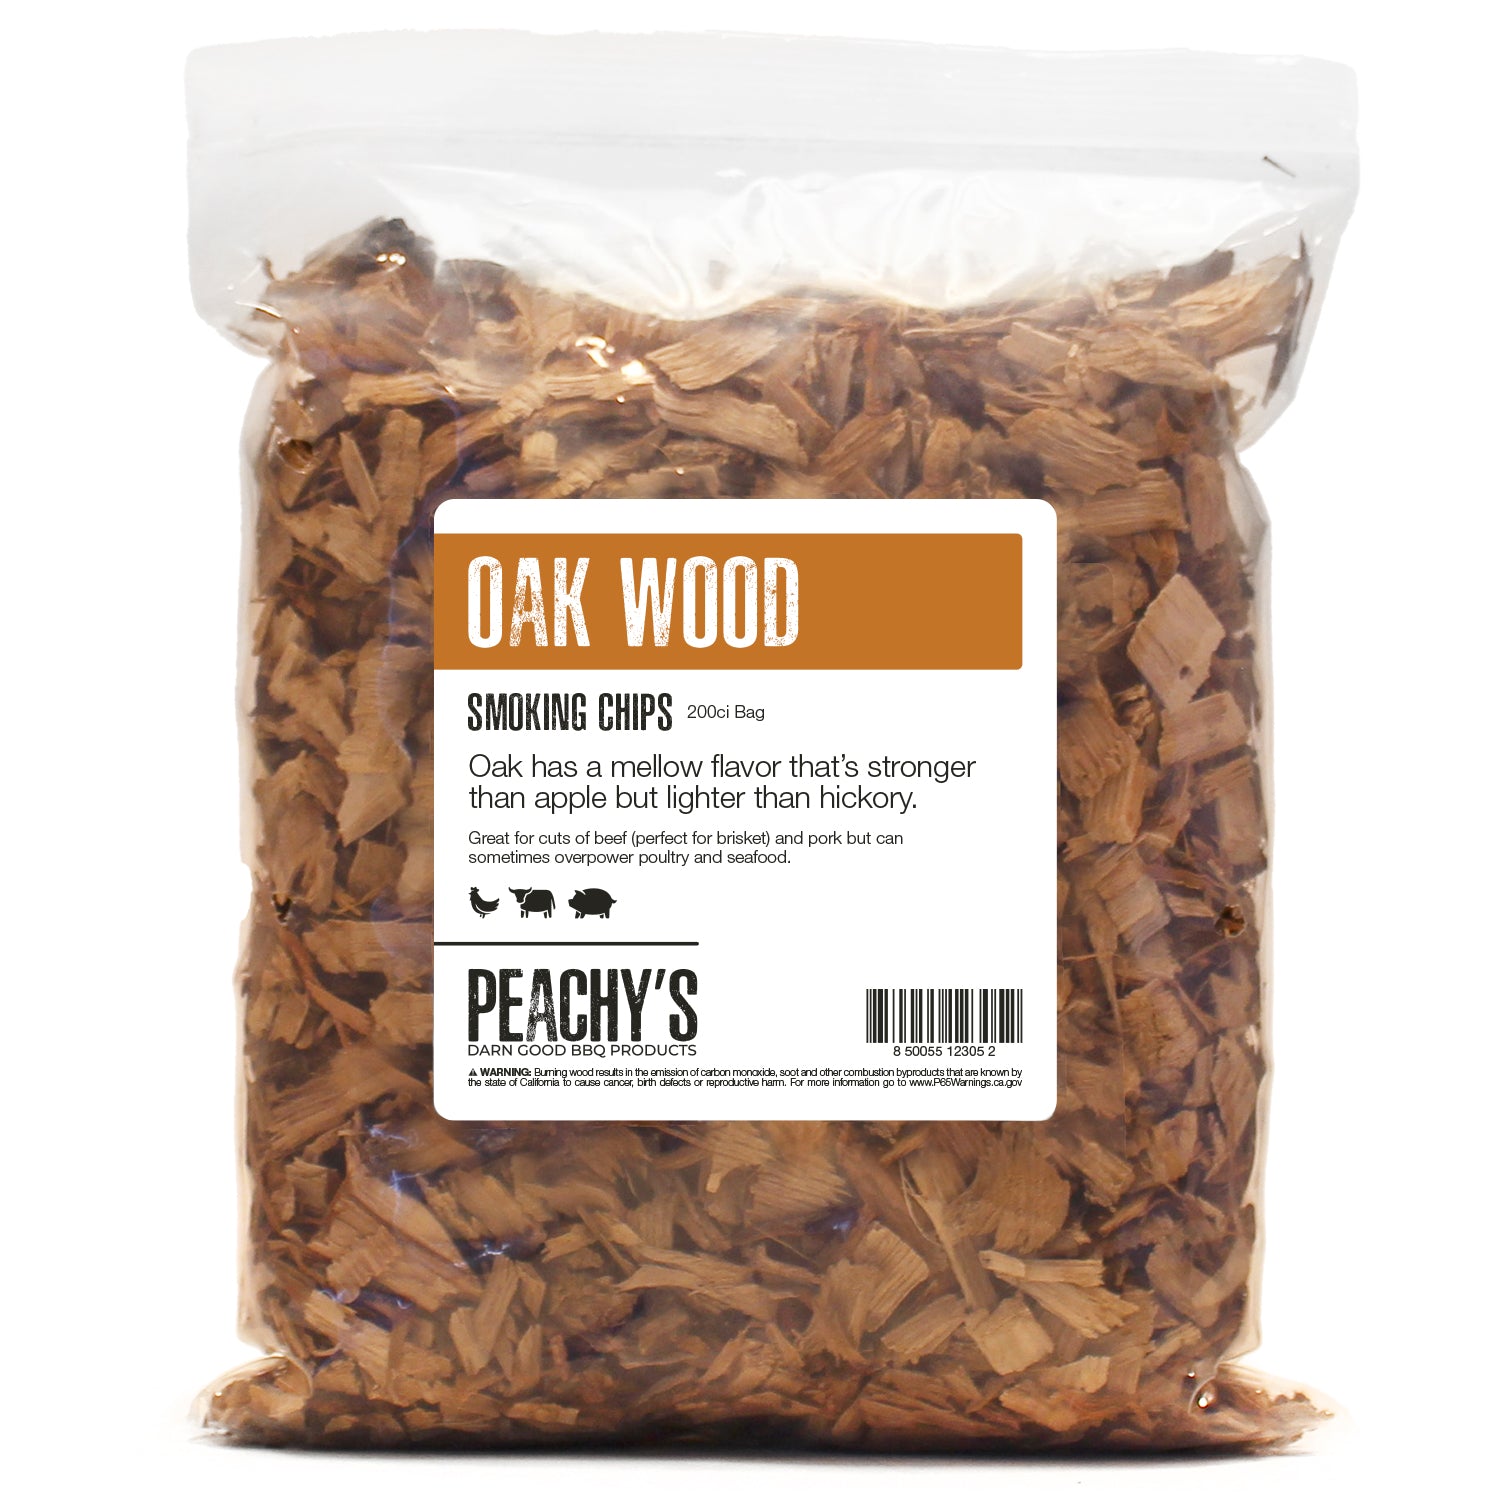 OAK Chips | 200ci Bag of Premium Smoking Woods by PEACHY'S